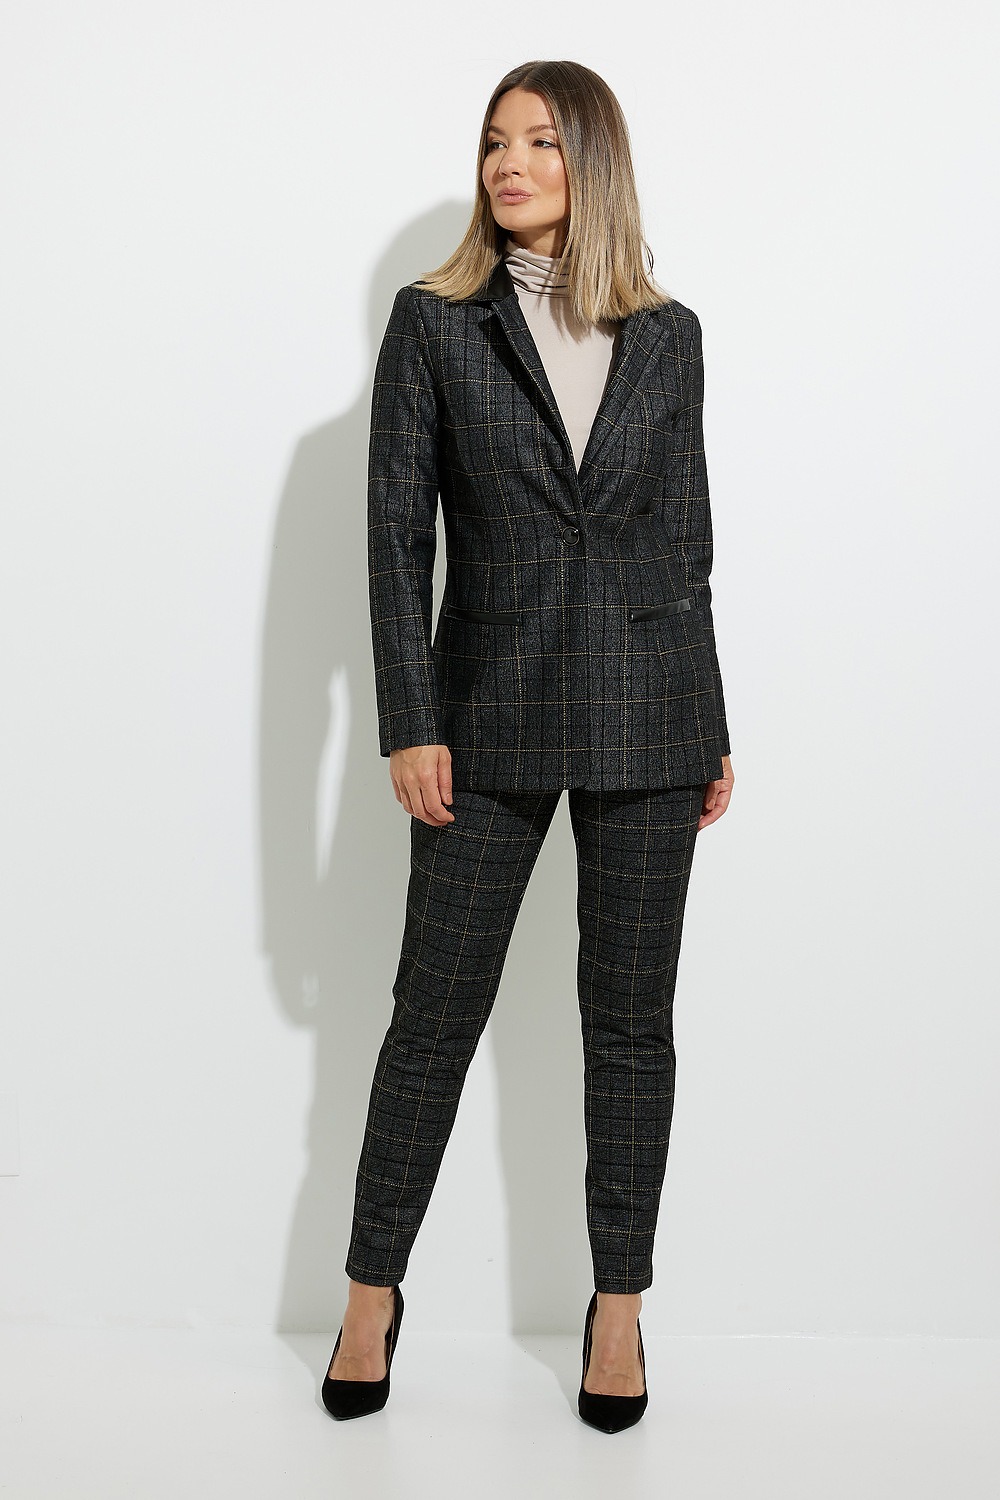 Joseph Ribkoff Slim Leg Plaid Pants Style 224091. Grey/multi